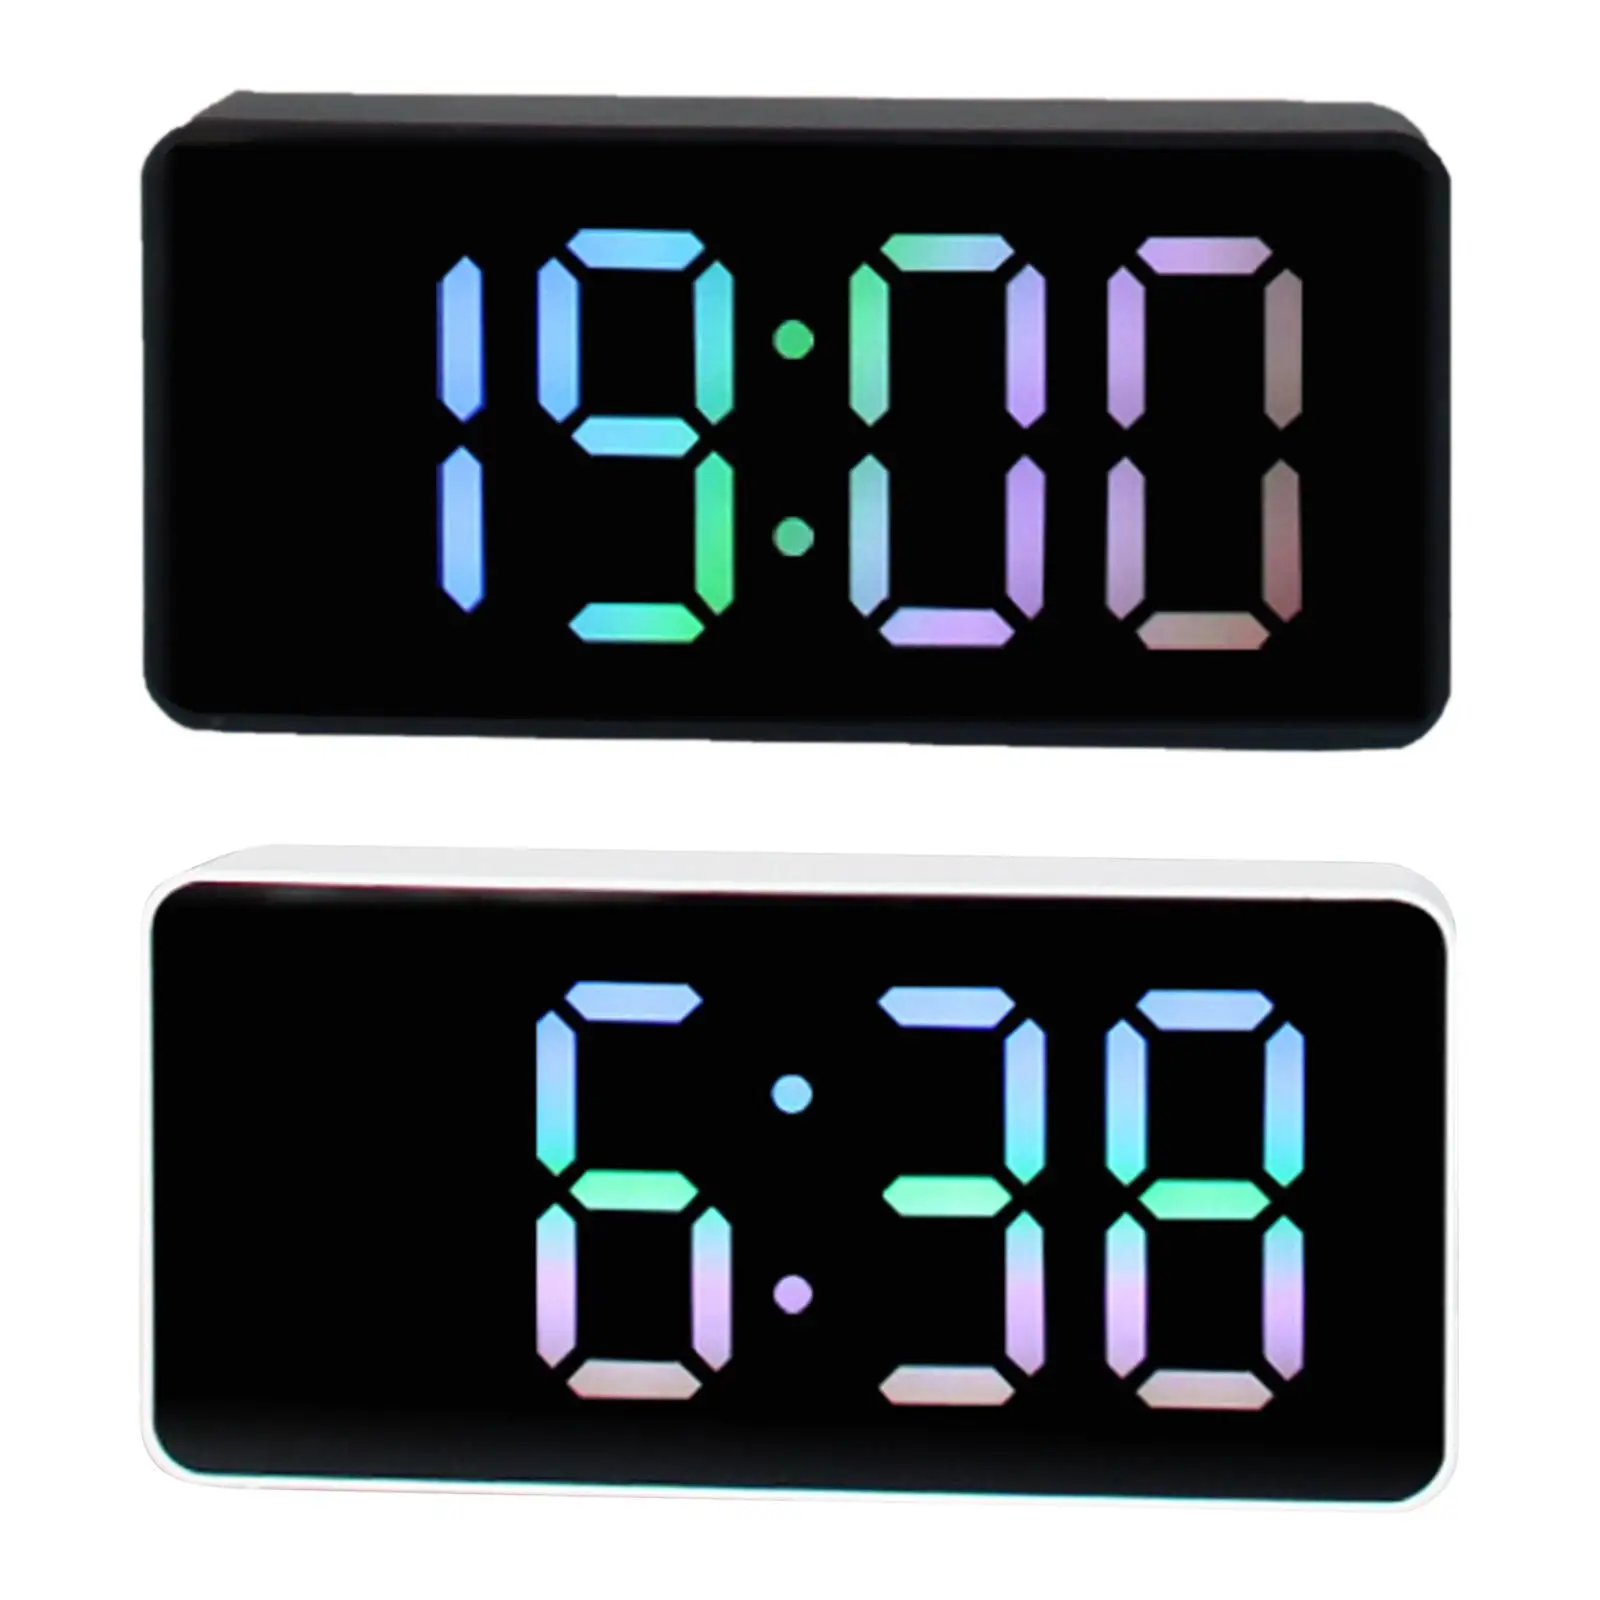 Digital alarms Clock 12/24H Voice Control Calendar USB Charging Electronic Clock Desk Clock for Bedside Cafe Home Living Room